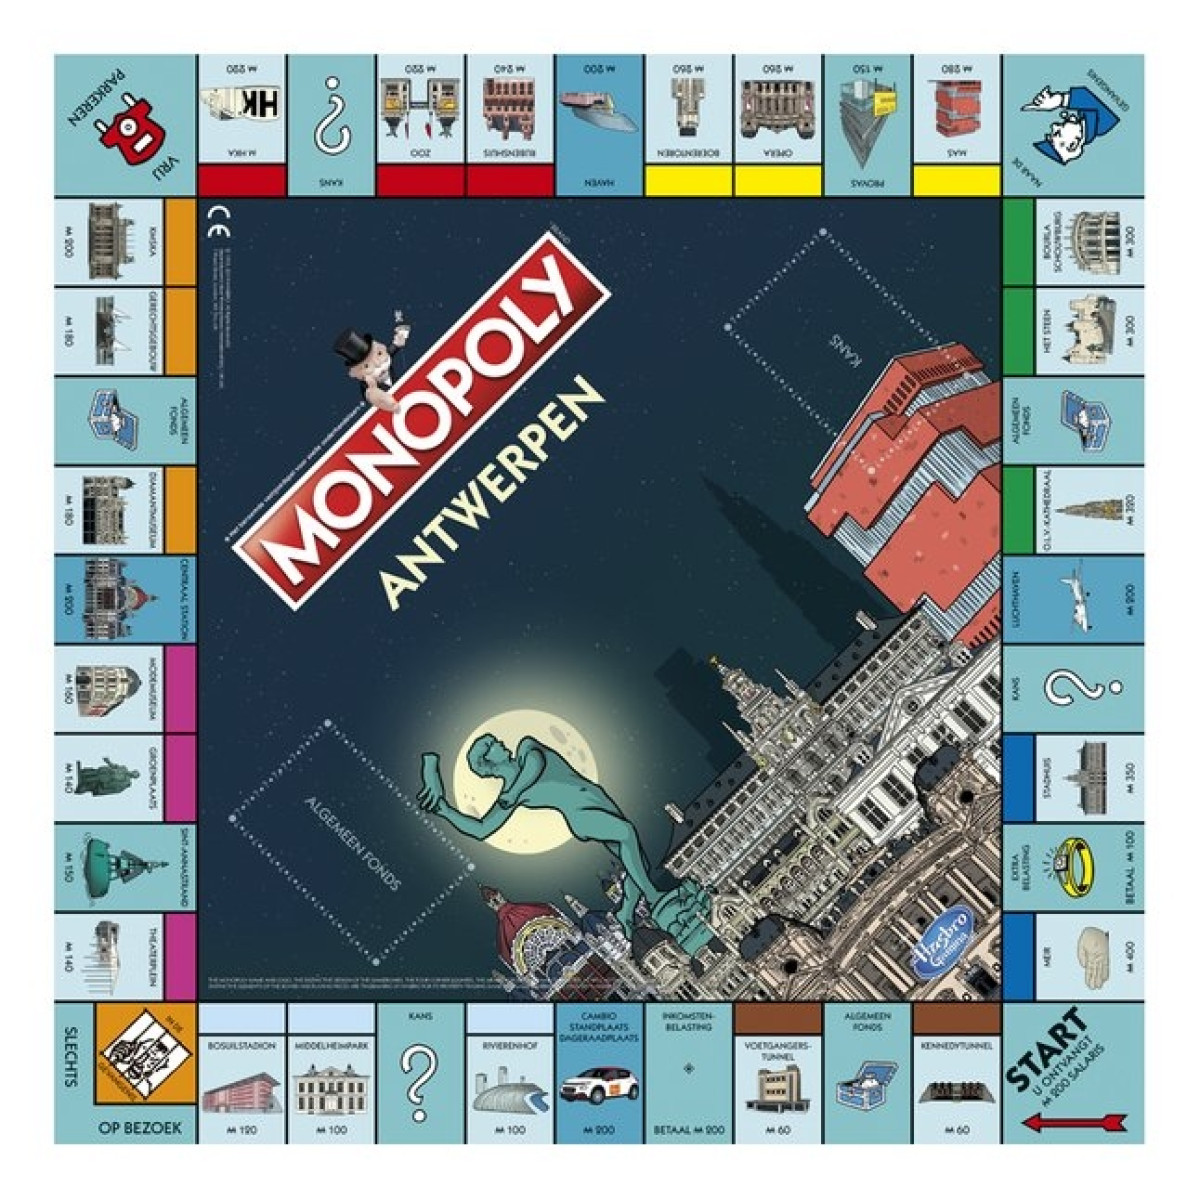 De essay Expertise Monopoly Antwerpen *Limited Edition* kopen op Amusement.be